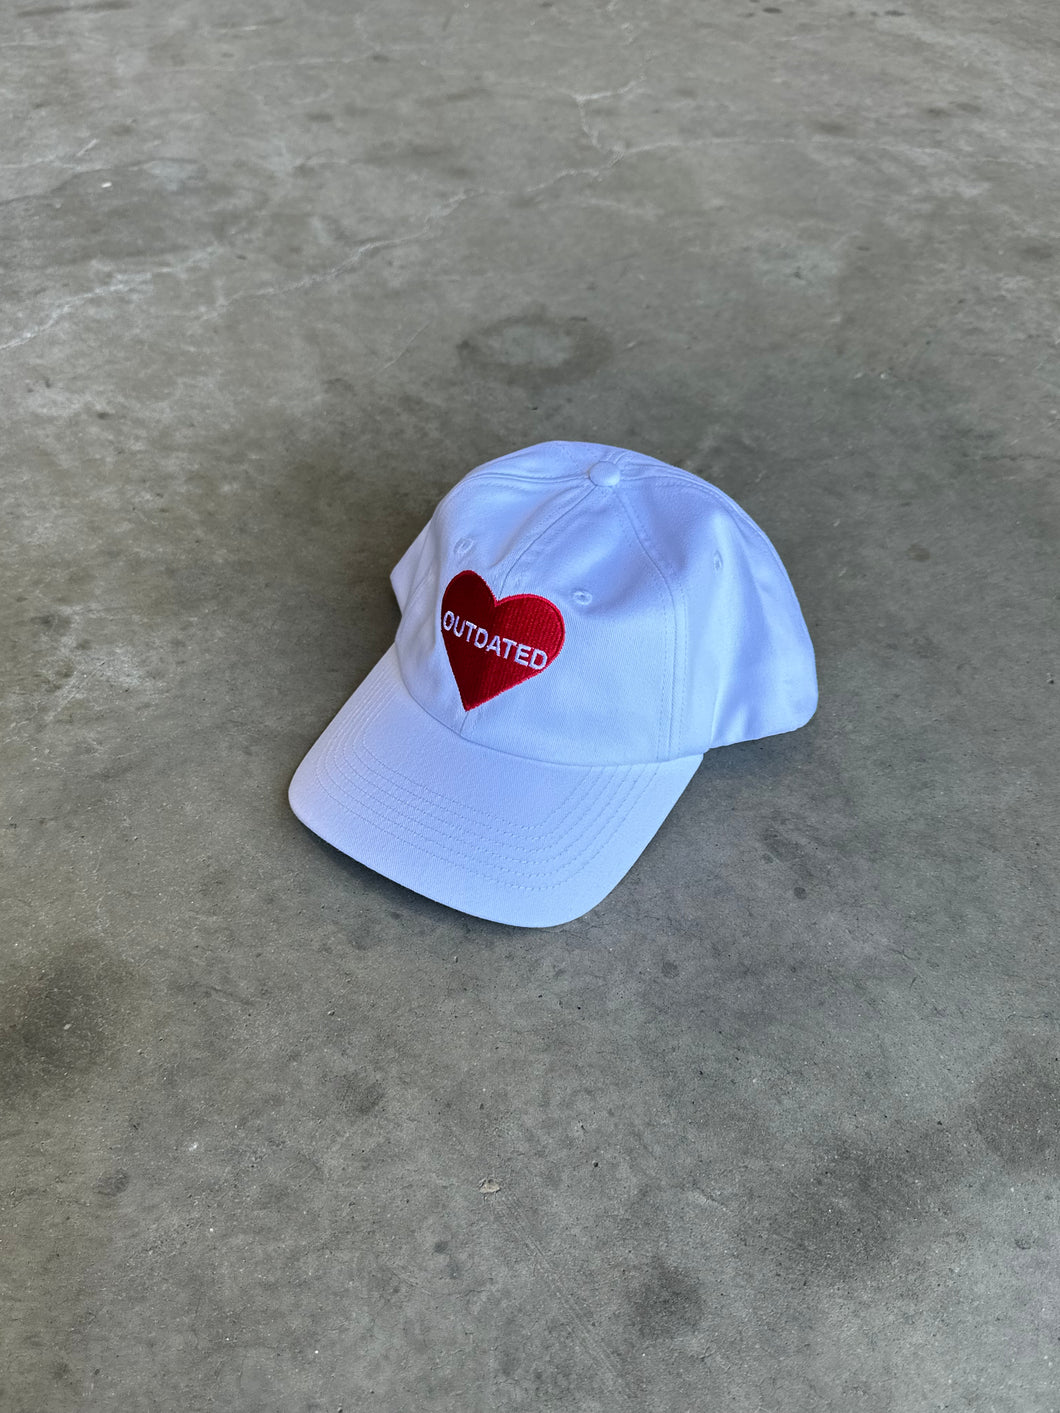 Heart cap